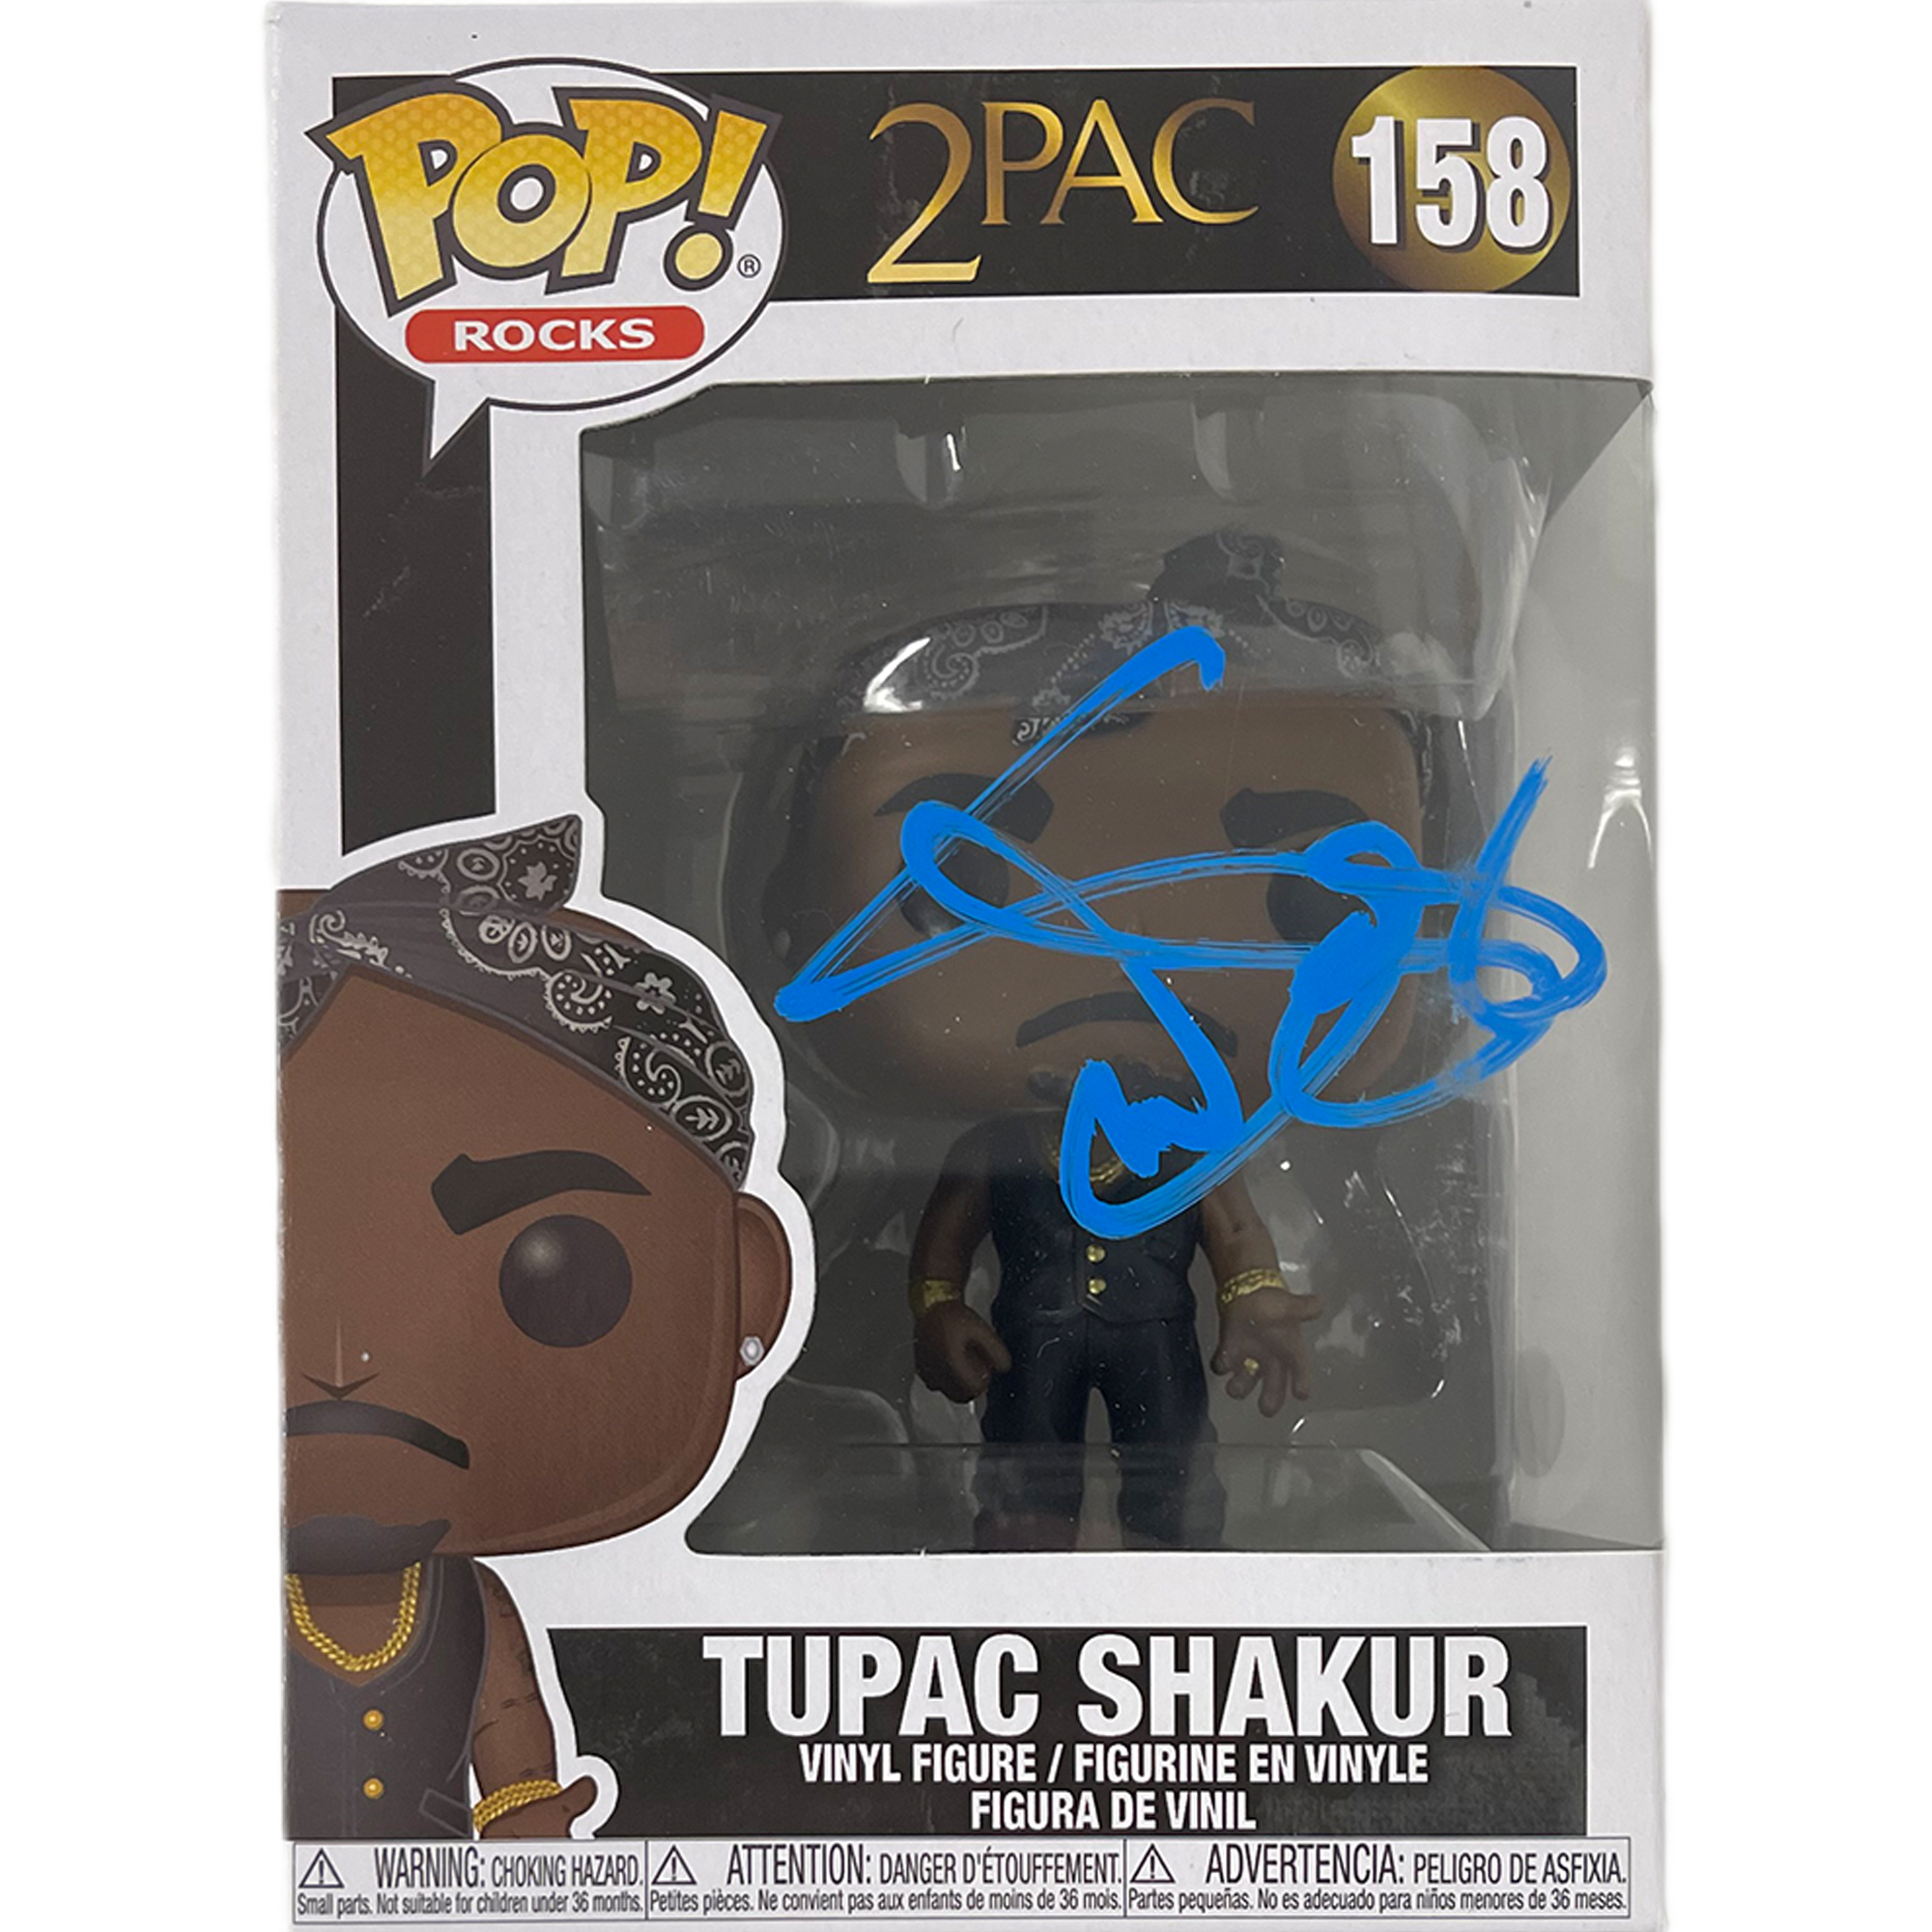 Snoop Dogg Signed Tupac Shakur #158 Funko Pop! Vinyl Figure (JSA Holog...